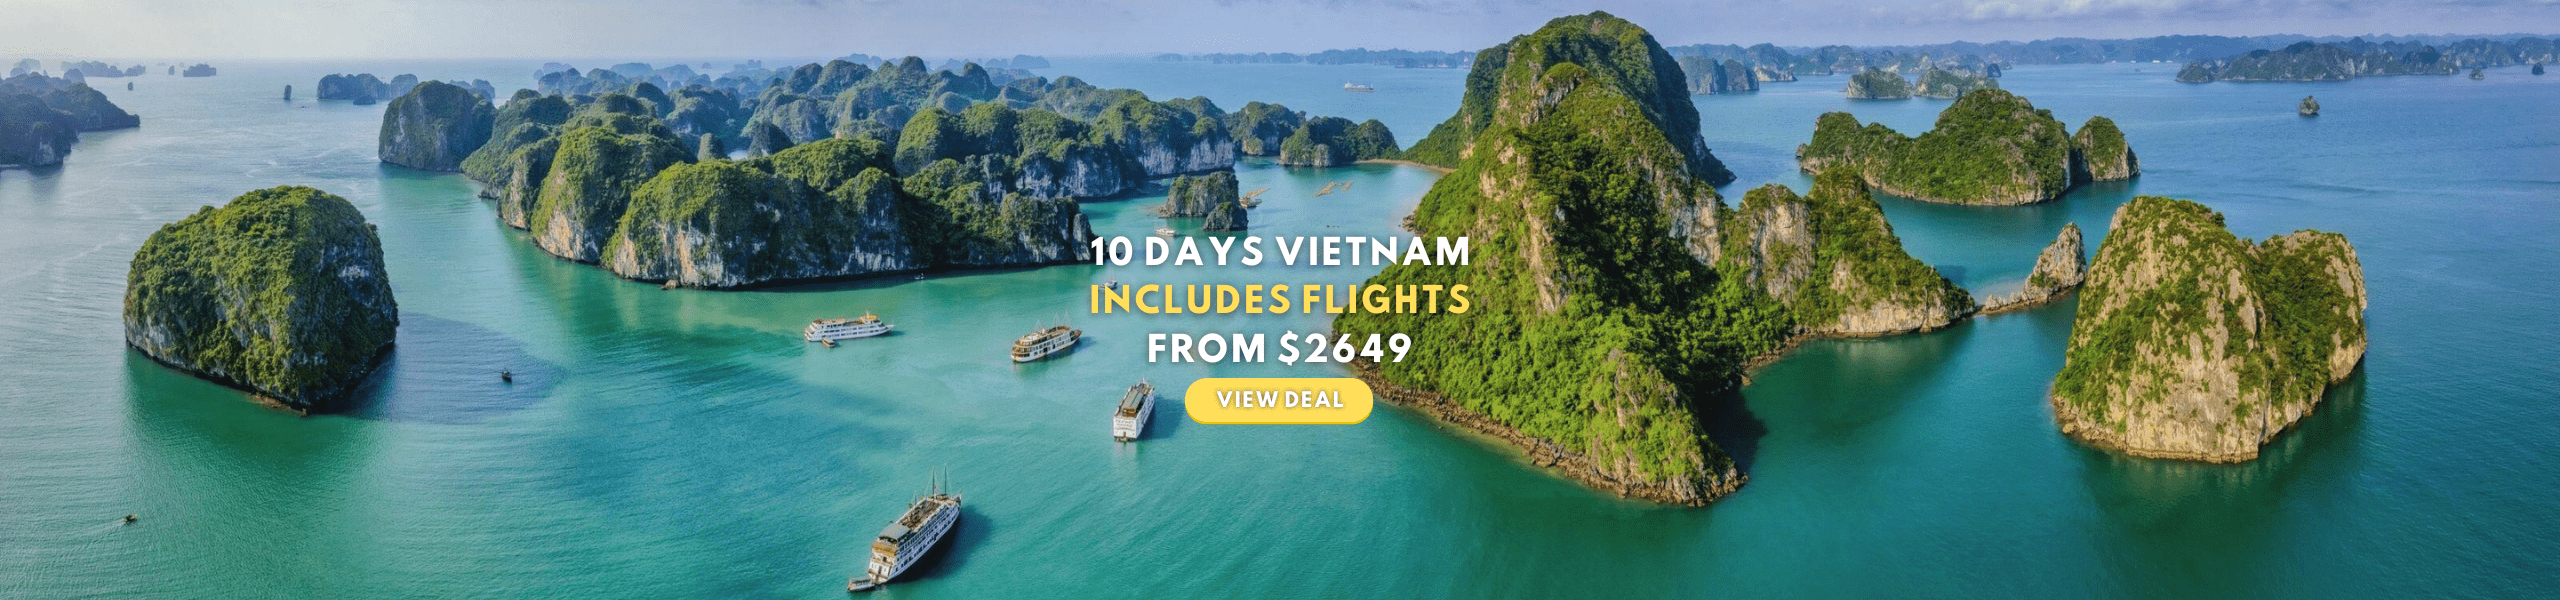 Vietnam Tour With Flights From Australia 